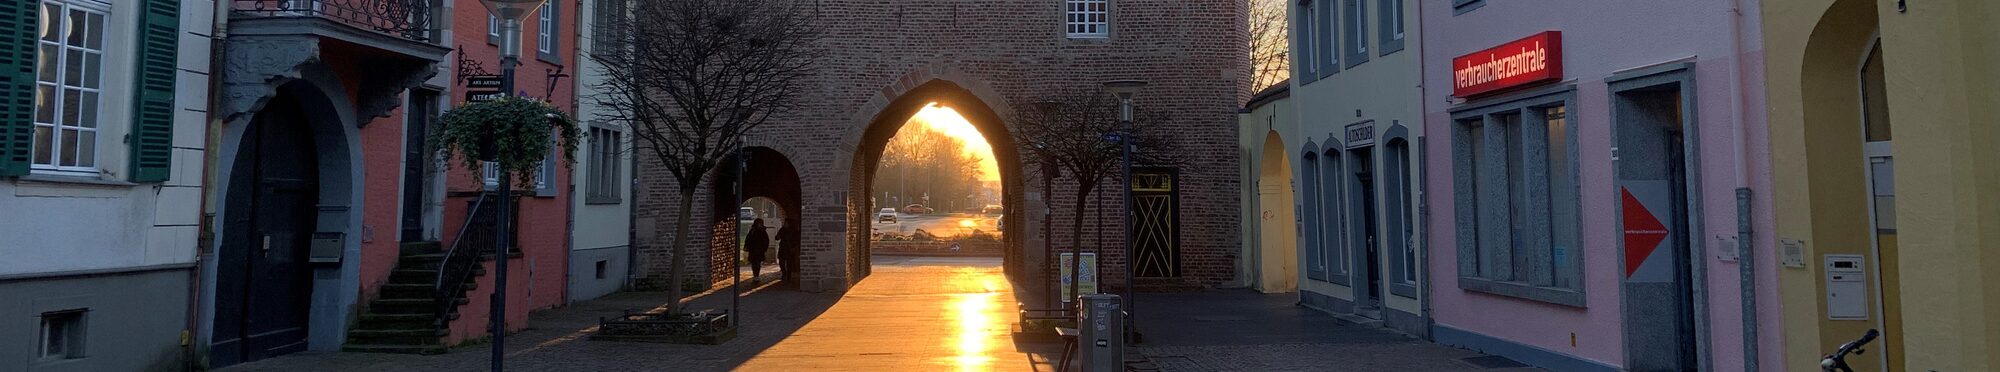 Aachener Tor im Sonnenuntergang